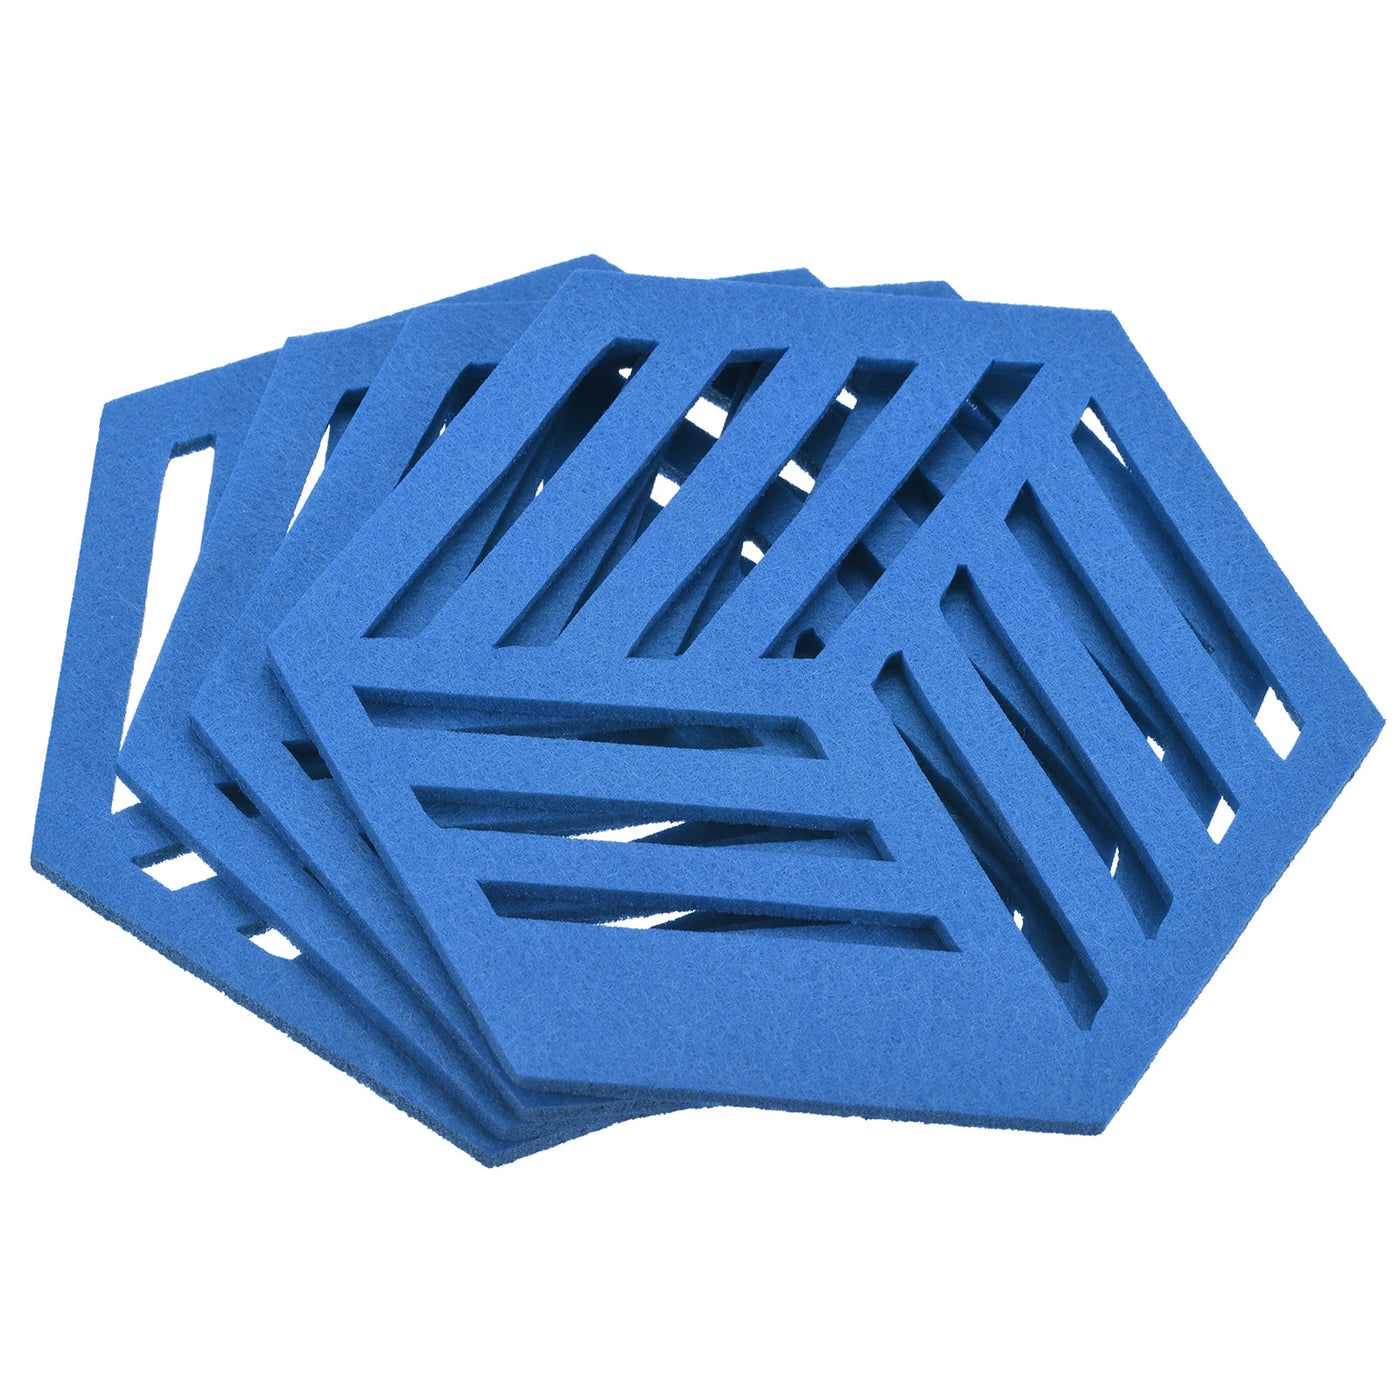 uxcell Uxcell Felt Coasters 4pcs Hexagon Mat Pad Coaster for Drink Cup Pot Vase Sky Blue